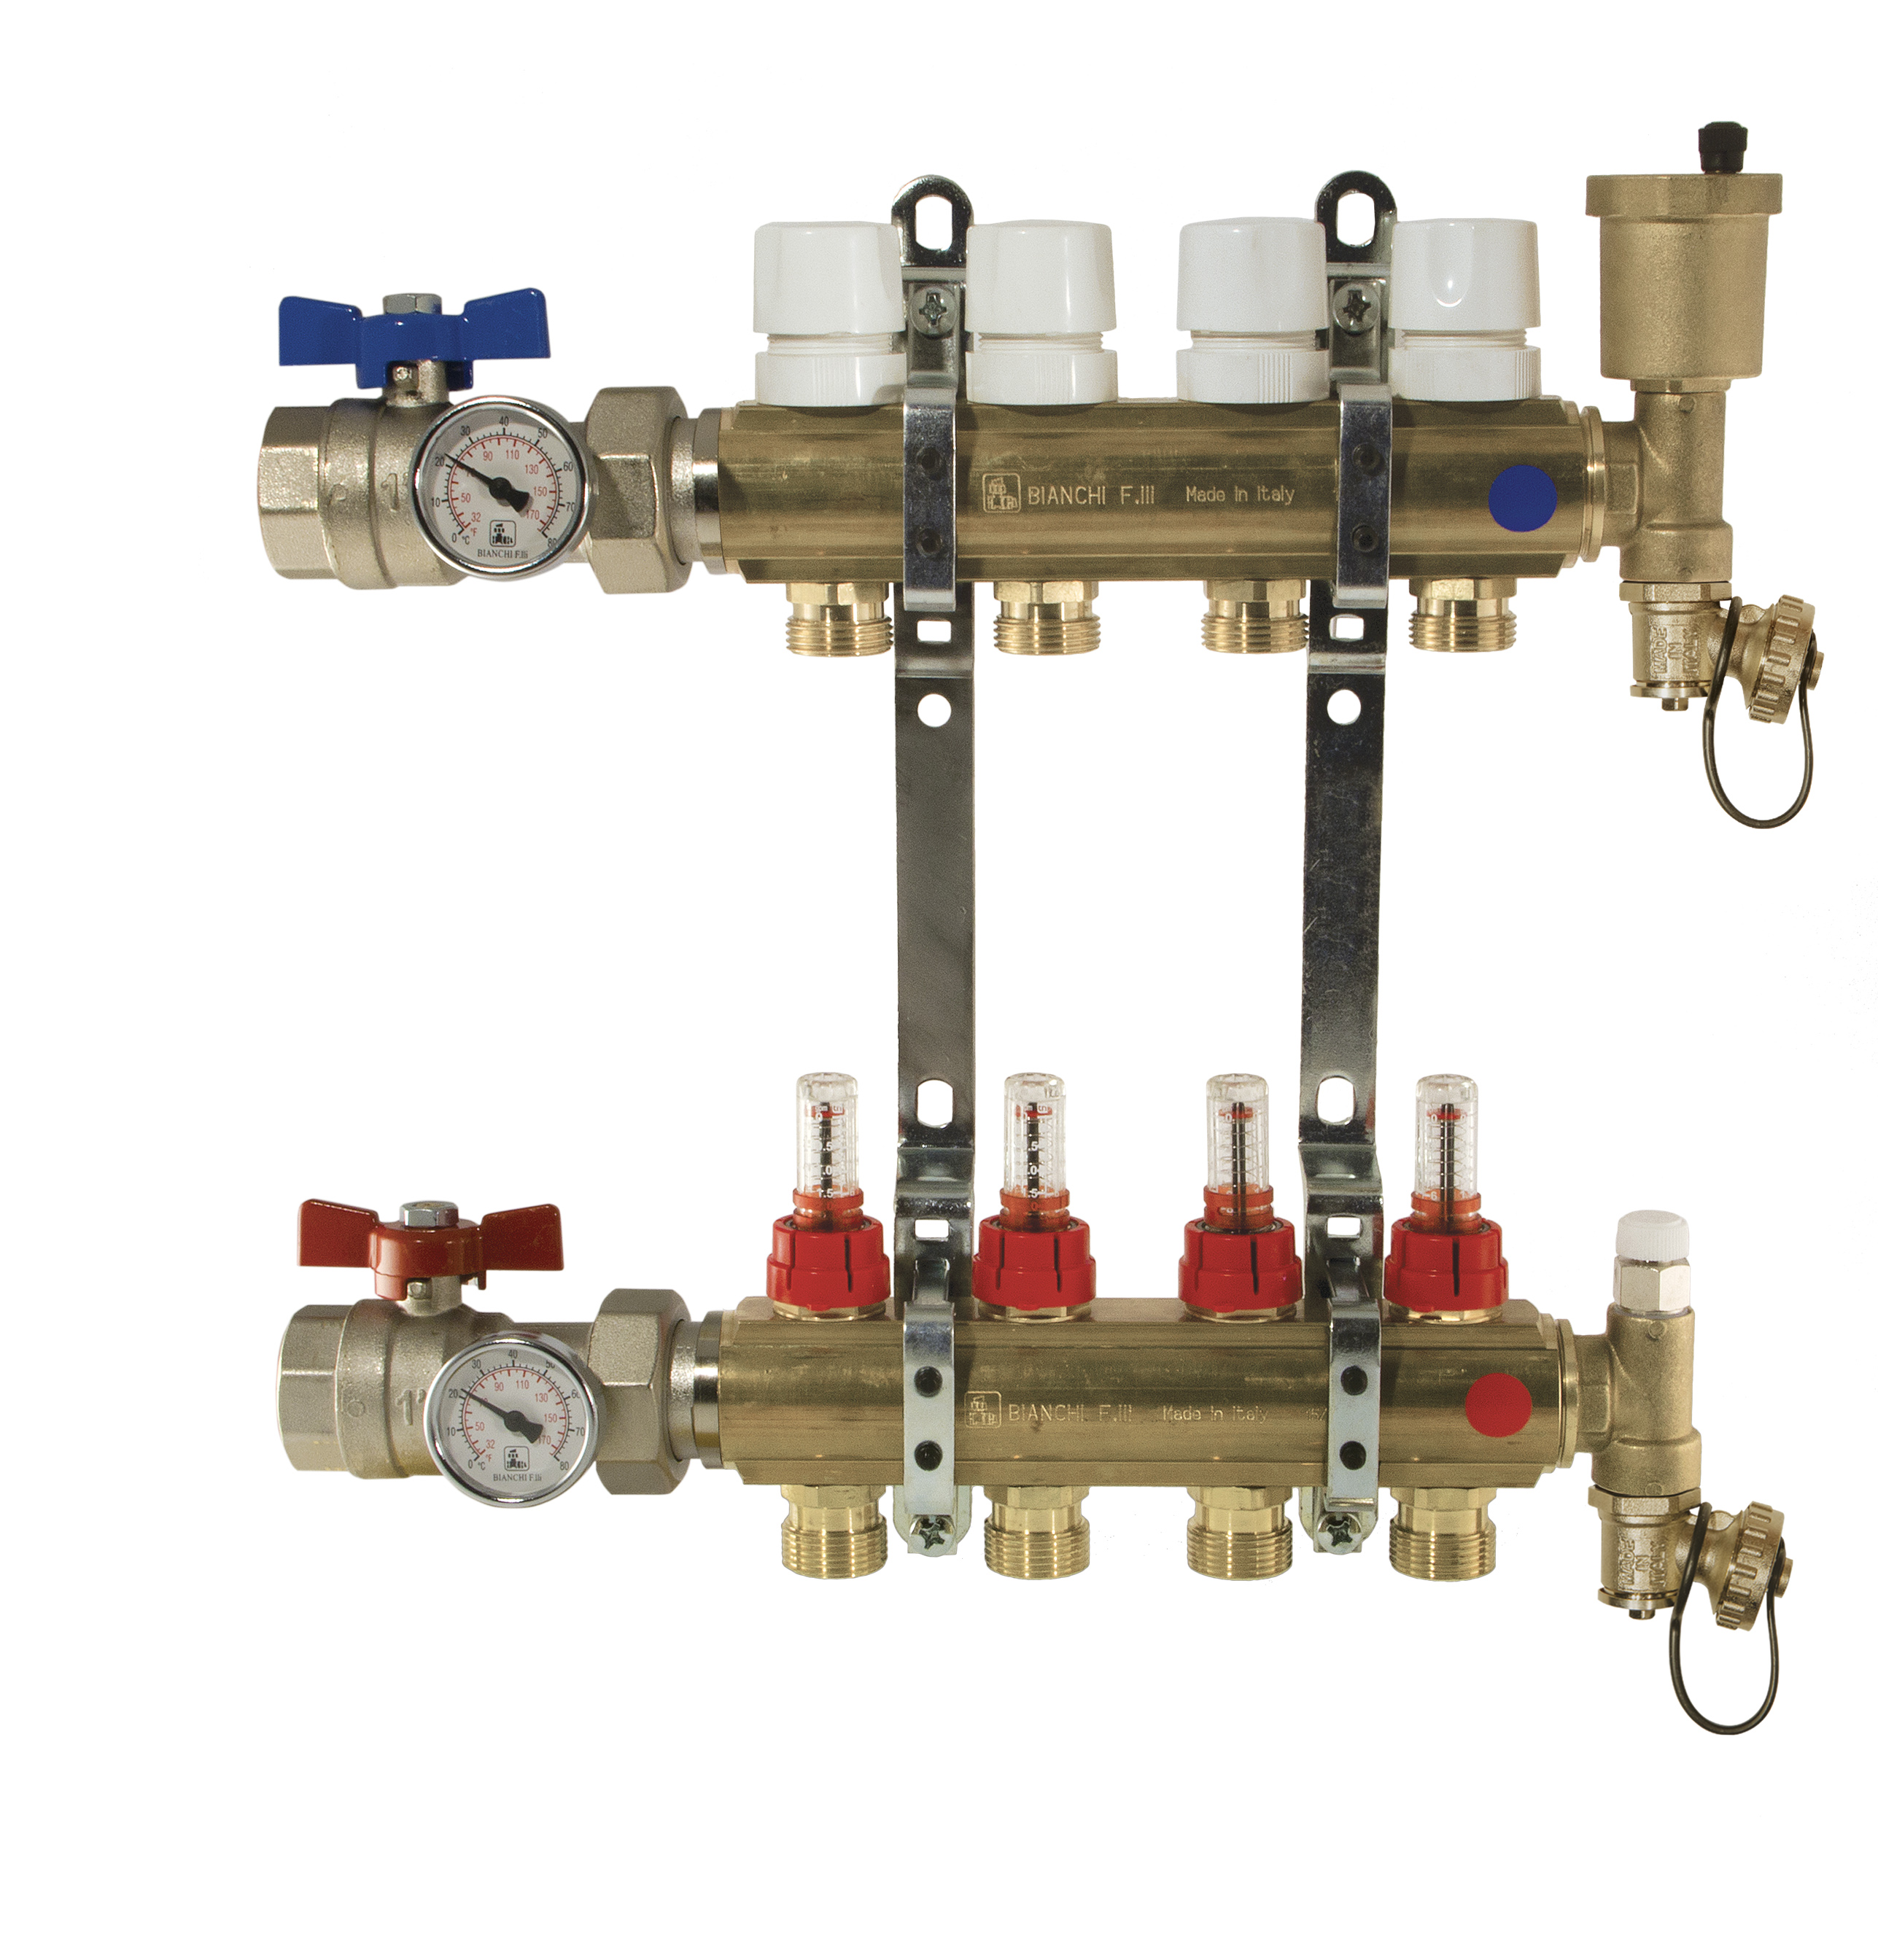 Brass manifolds therm. valves and flowmeters, valves, disch. %>